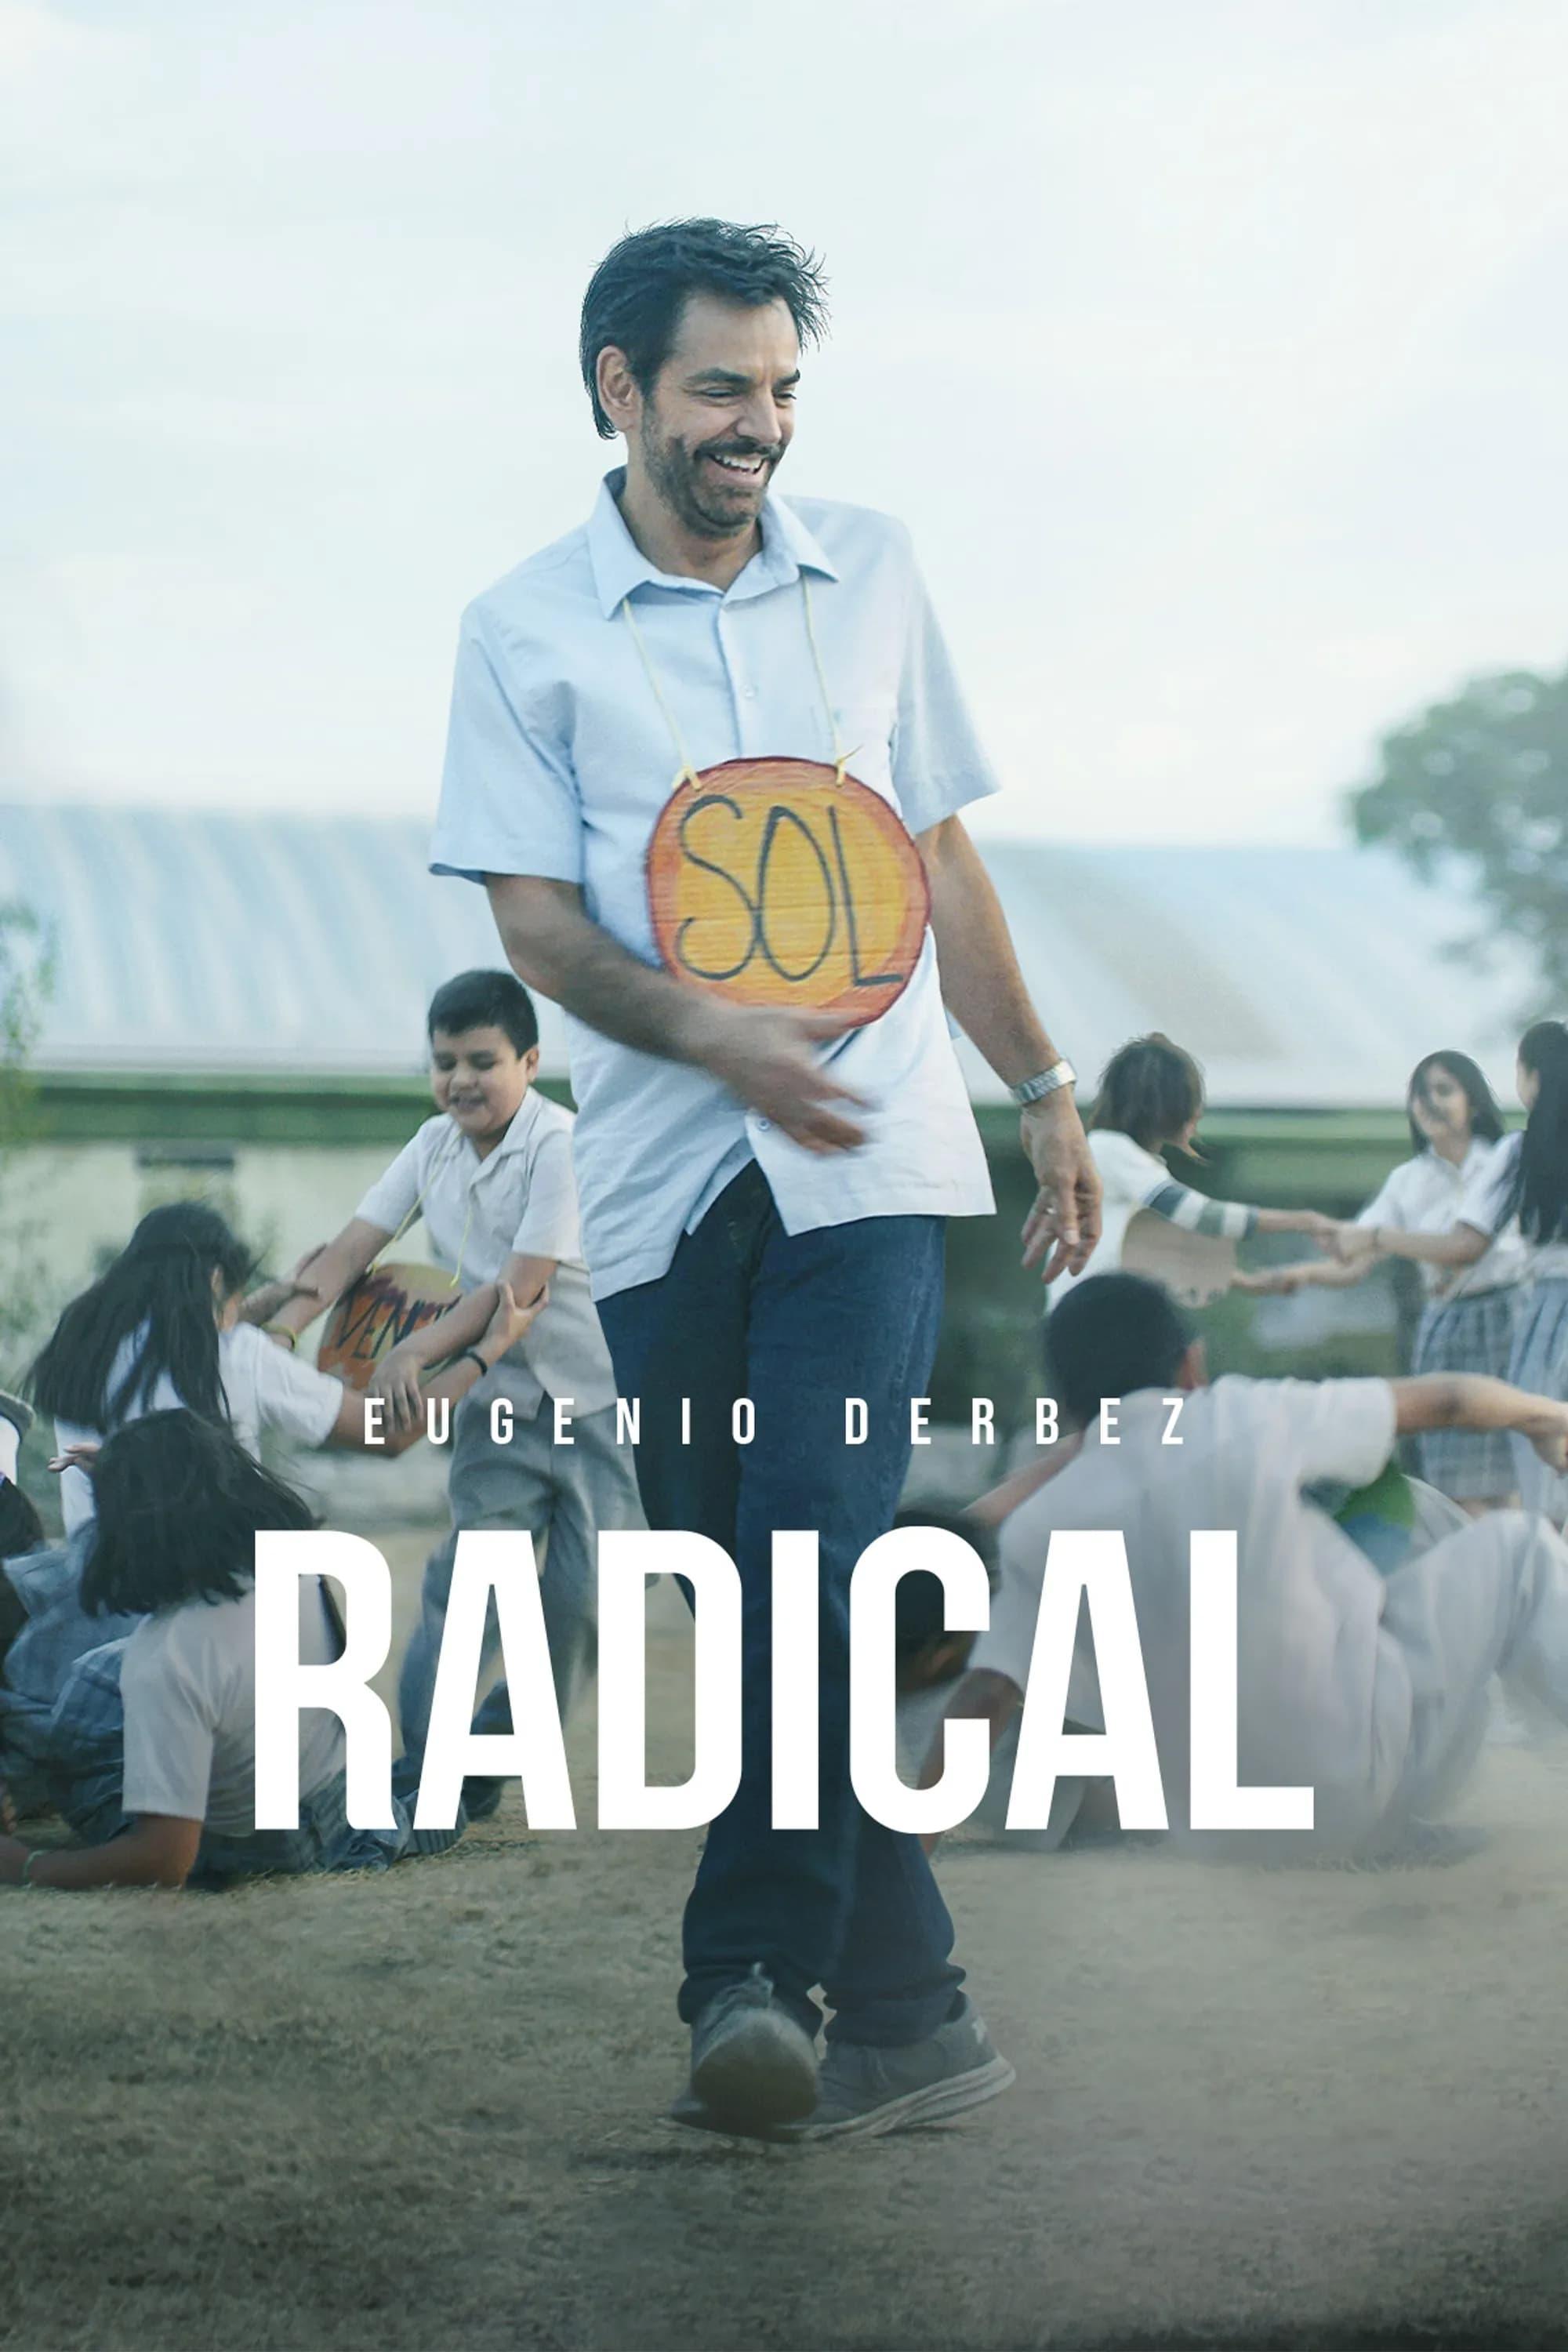 Radical poster